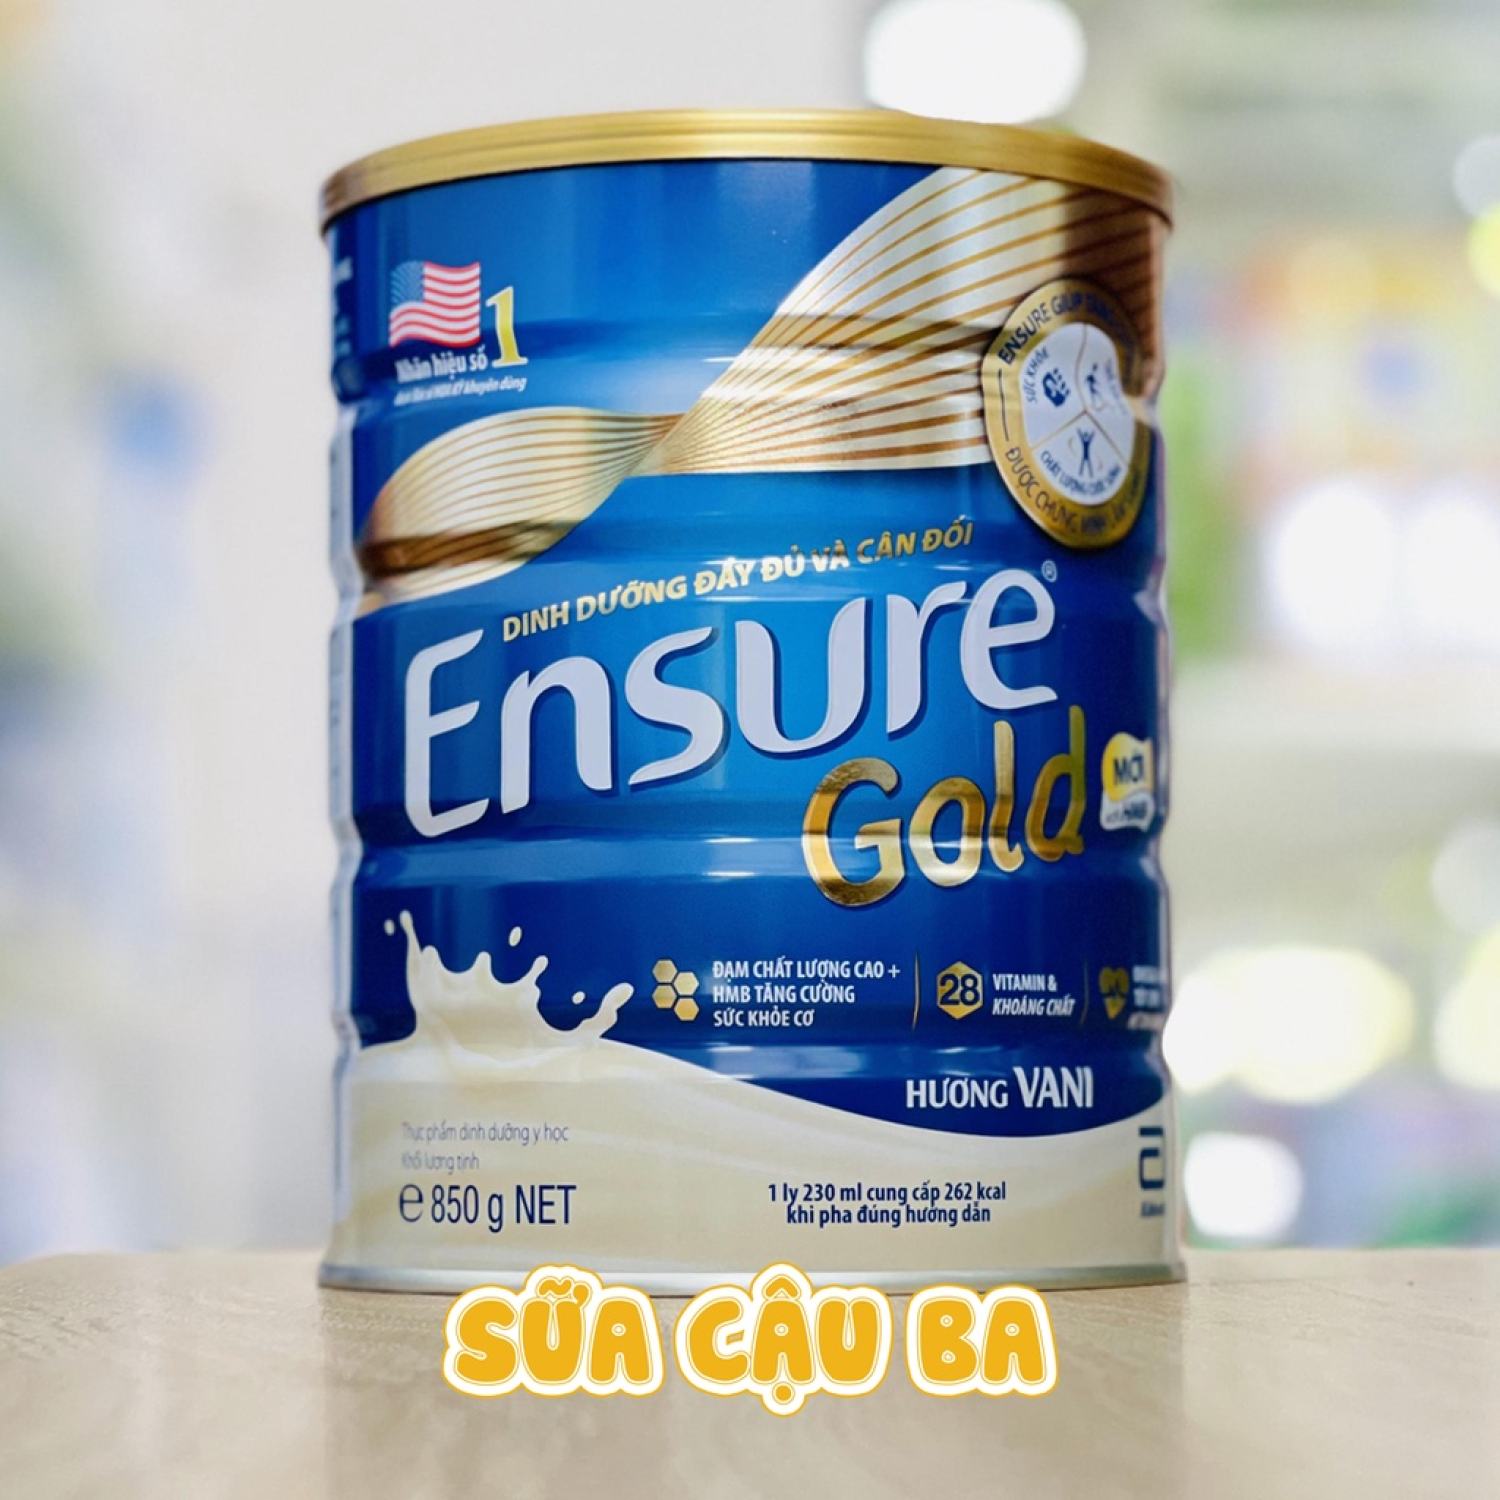 Ensure Gold milk powder Abbott vanilla Ated HMB 850g